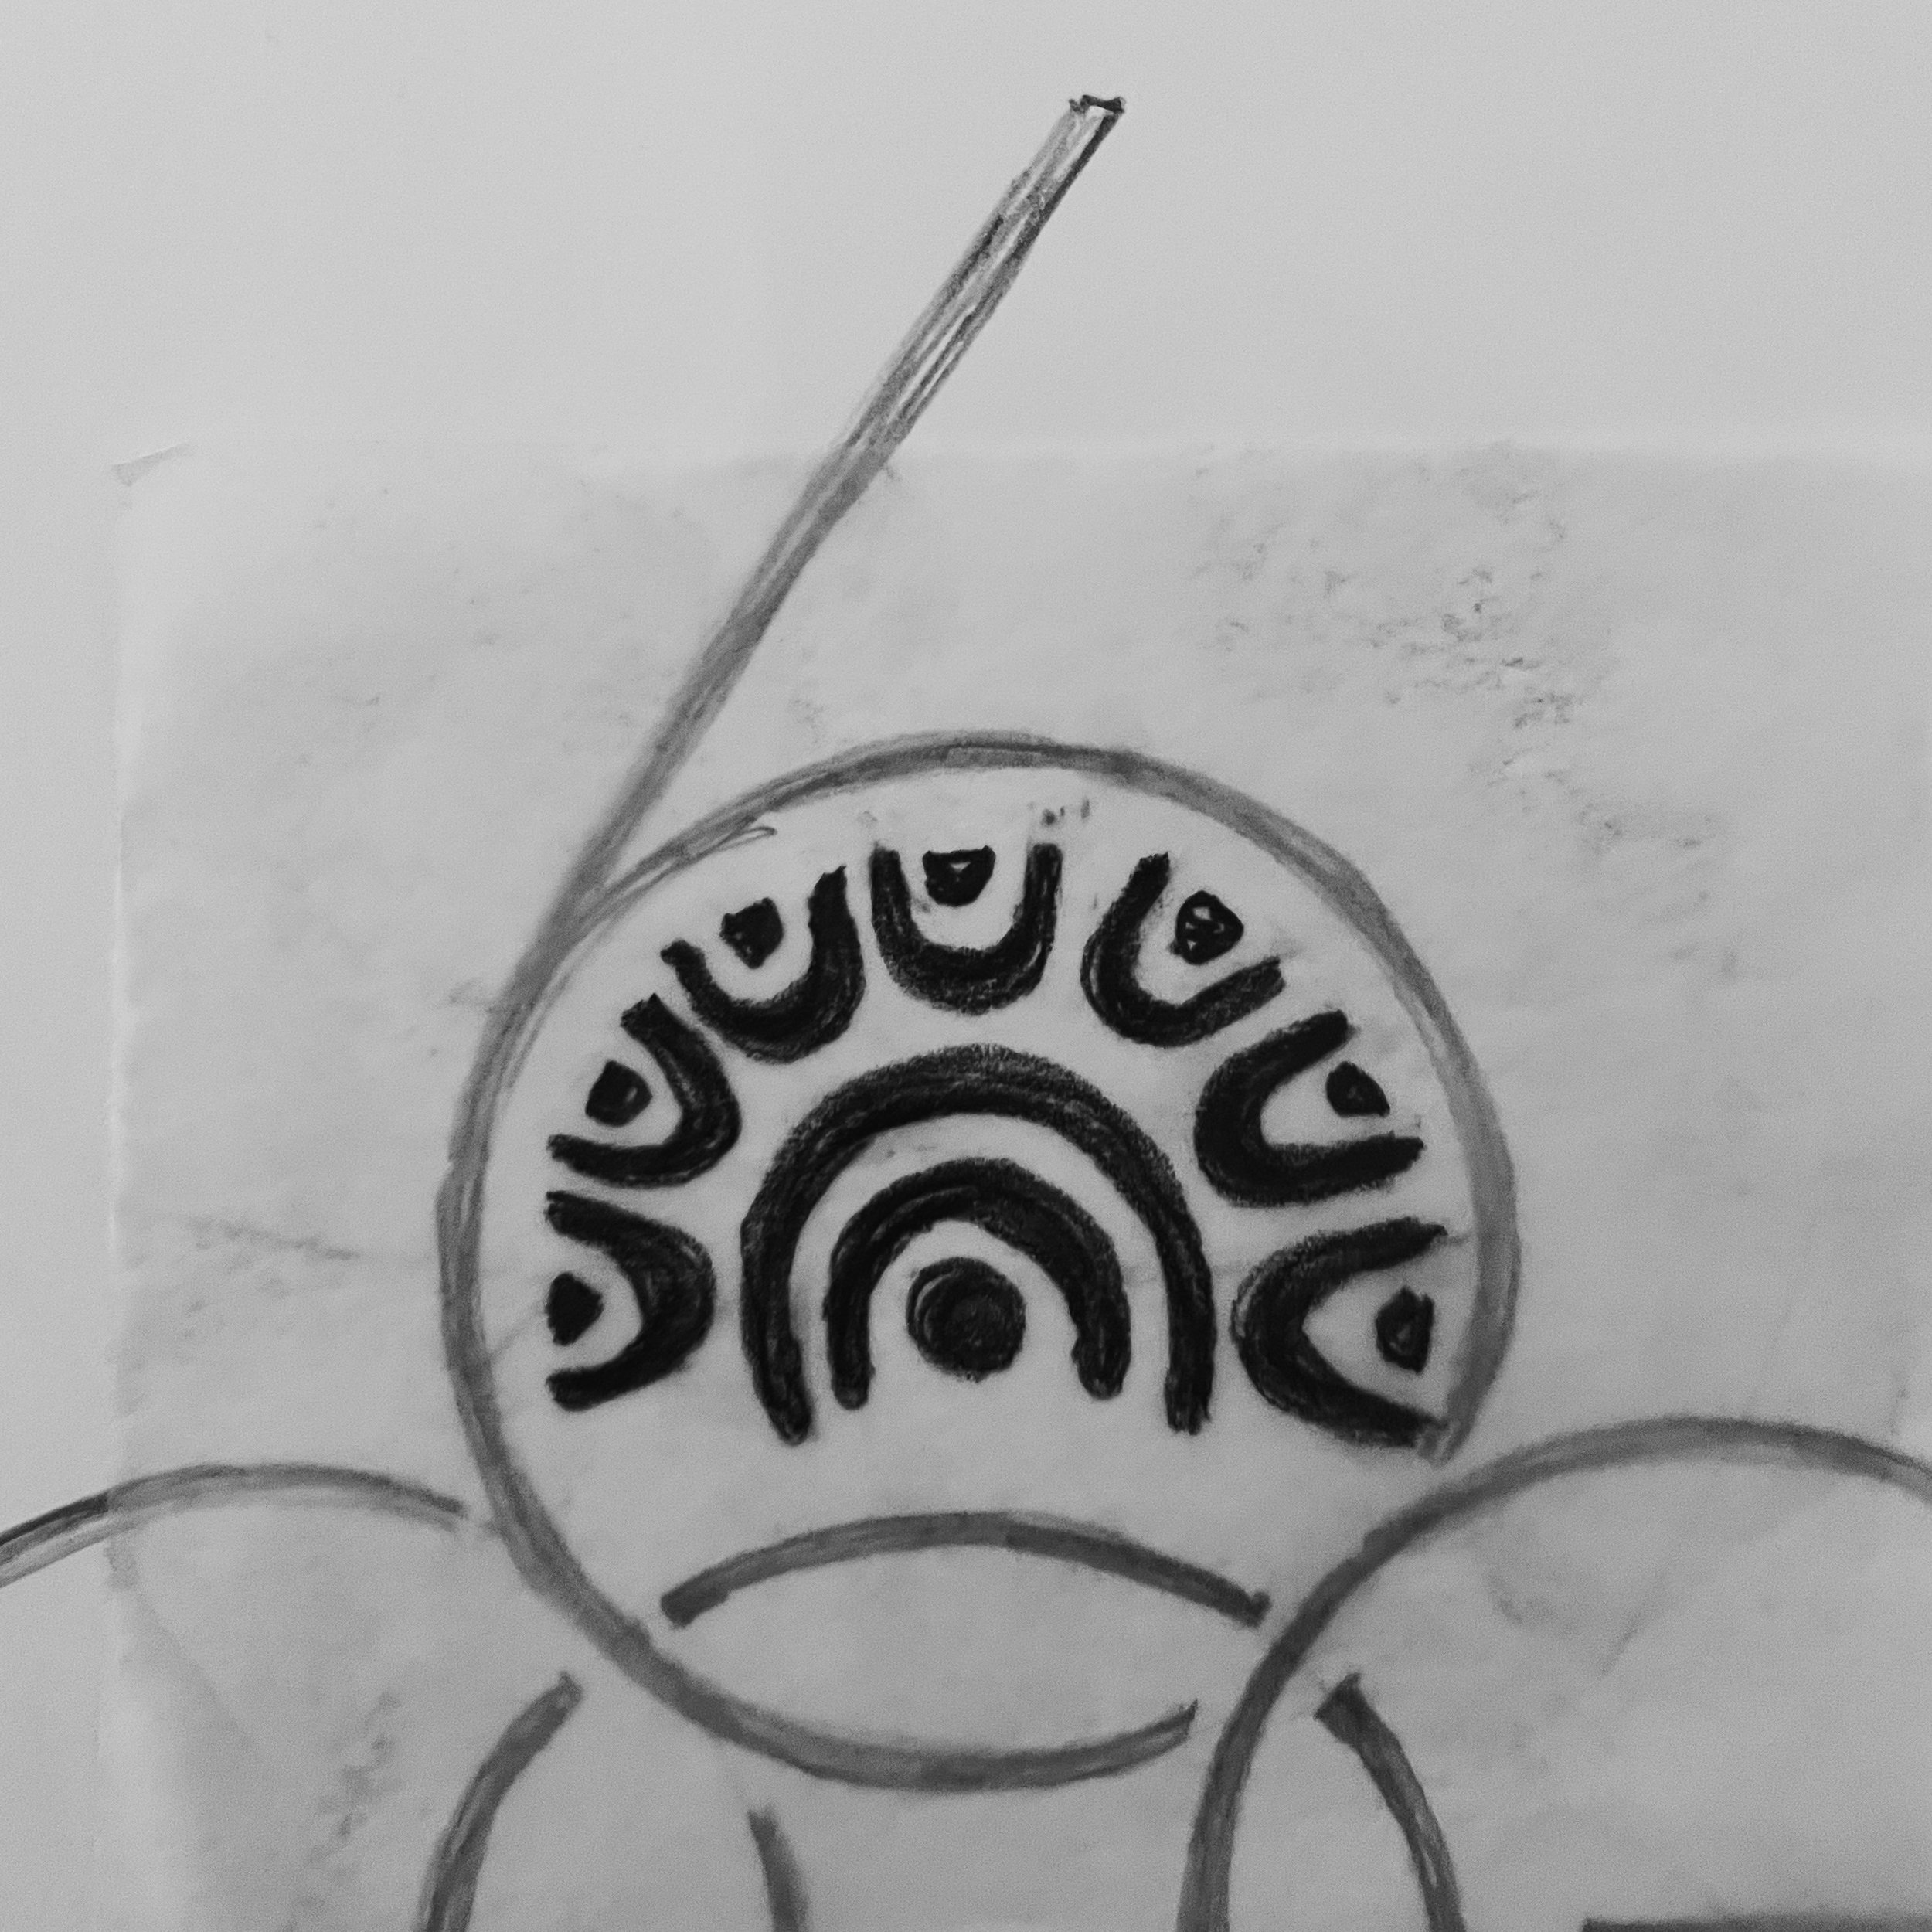 619 👀
#OGDC #OGDesignCo #Tecolote #Owl #GraphicDesign #Design #Logo #Logos #LogoDesigner #LogoDesigns #Logomark #LogoLounge #LogoInspirations #Icons #Symbols #Art #IdentityDesign #dribbble #Behance #SanDiego